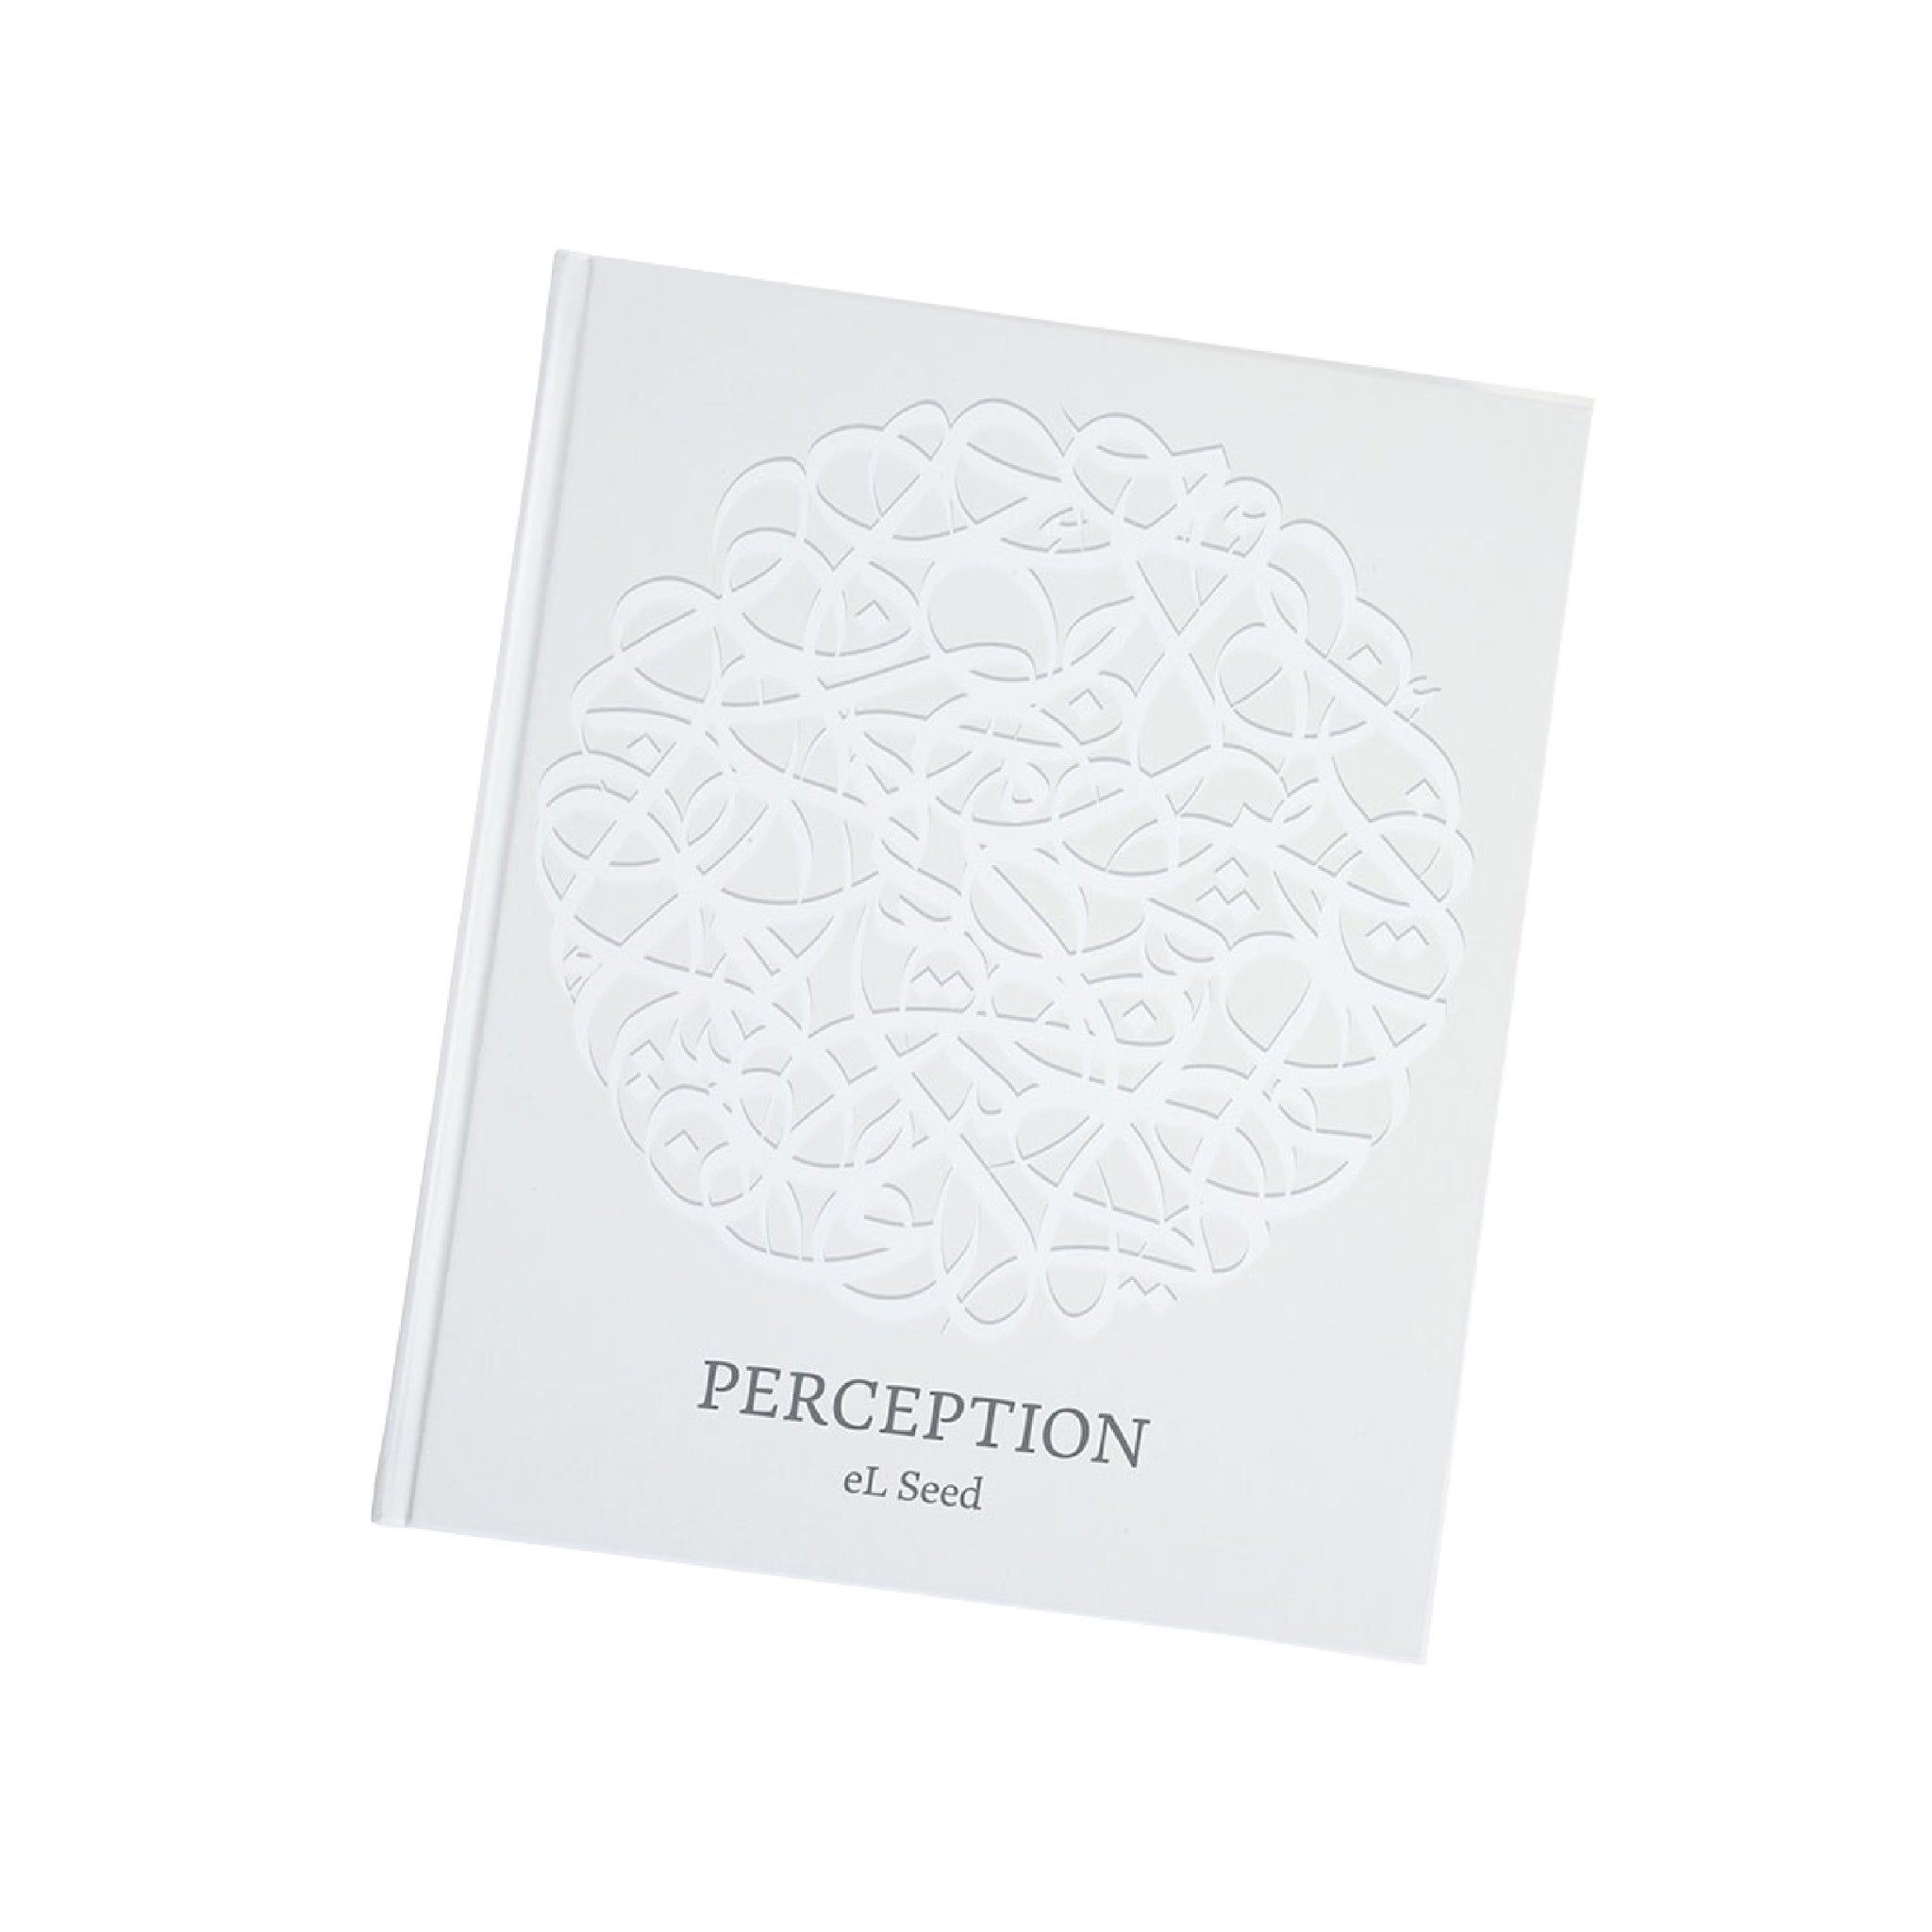 eL Seed: Perception: Limited Collector's Edition 412/500, 2019 - Wynwood Walls Shop